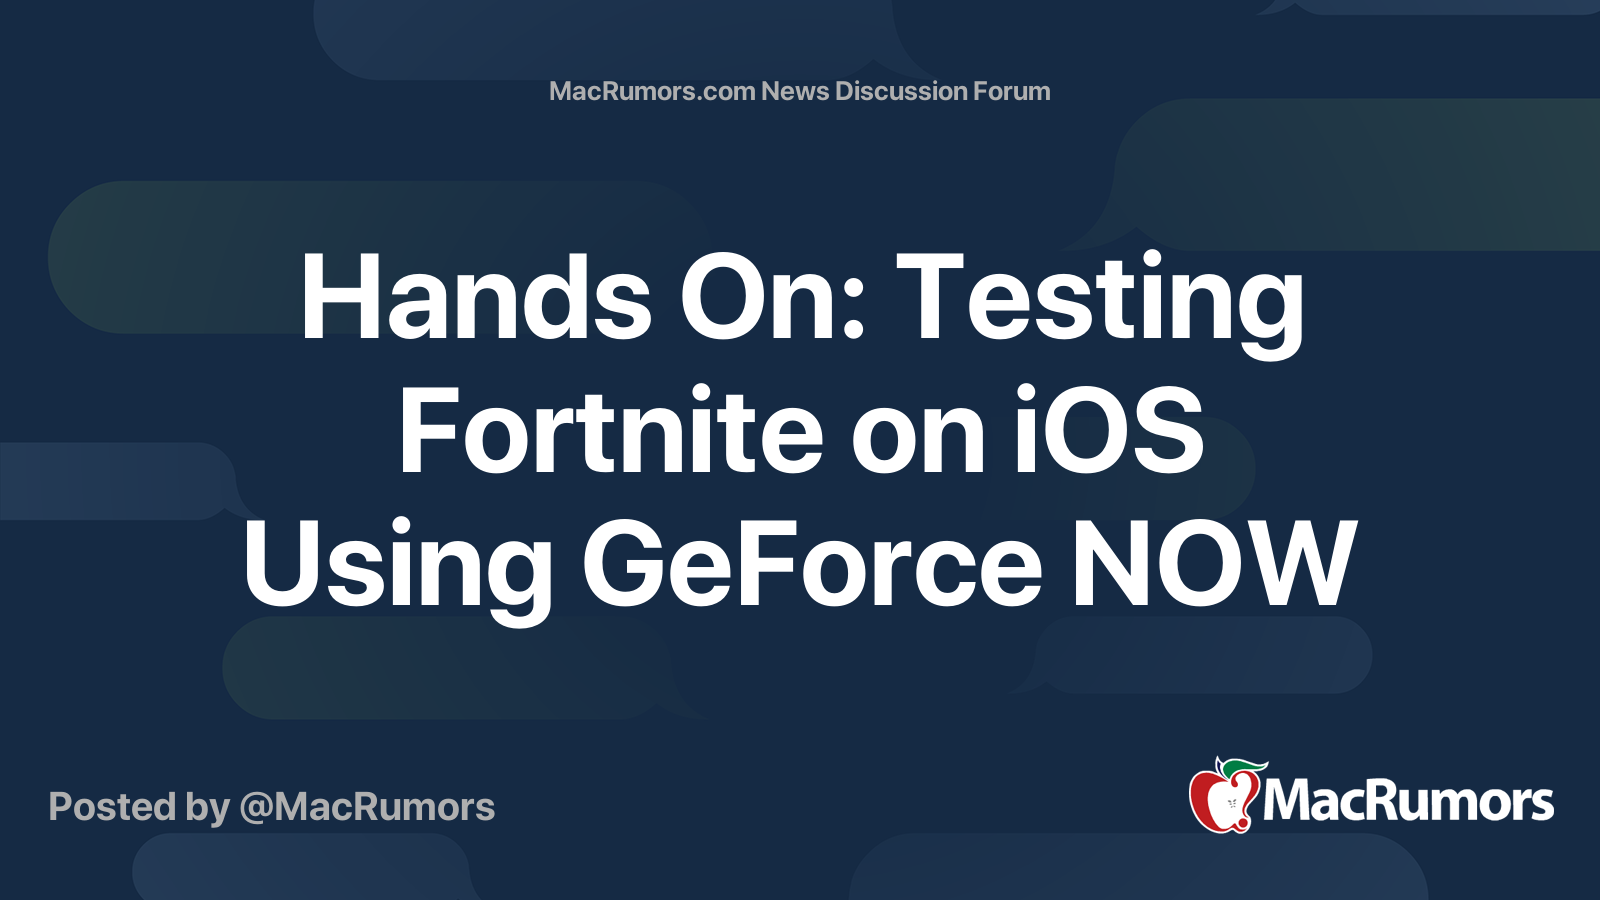 Fortnite's return to iOS via GeForce Now feels just fine - The Verge